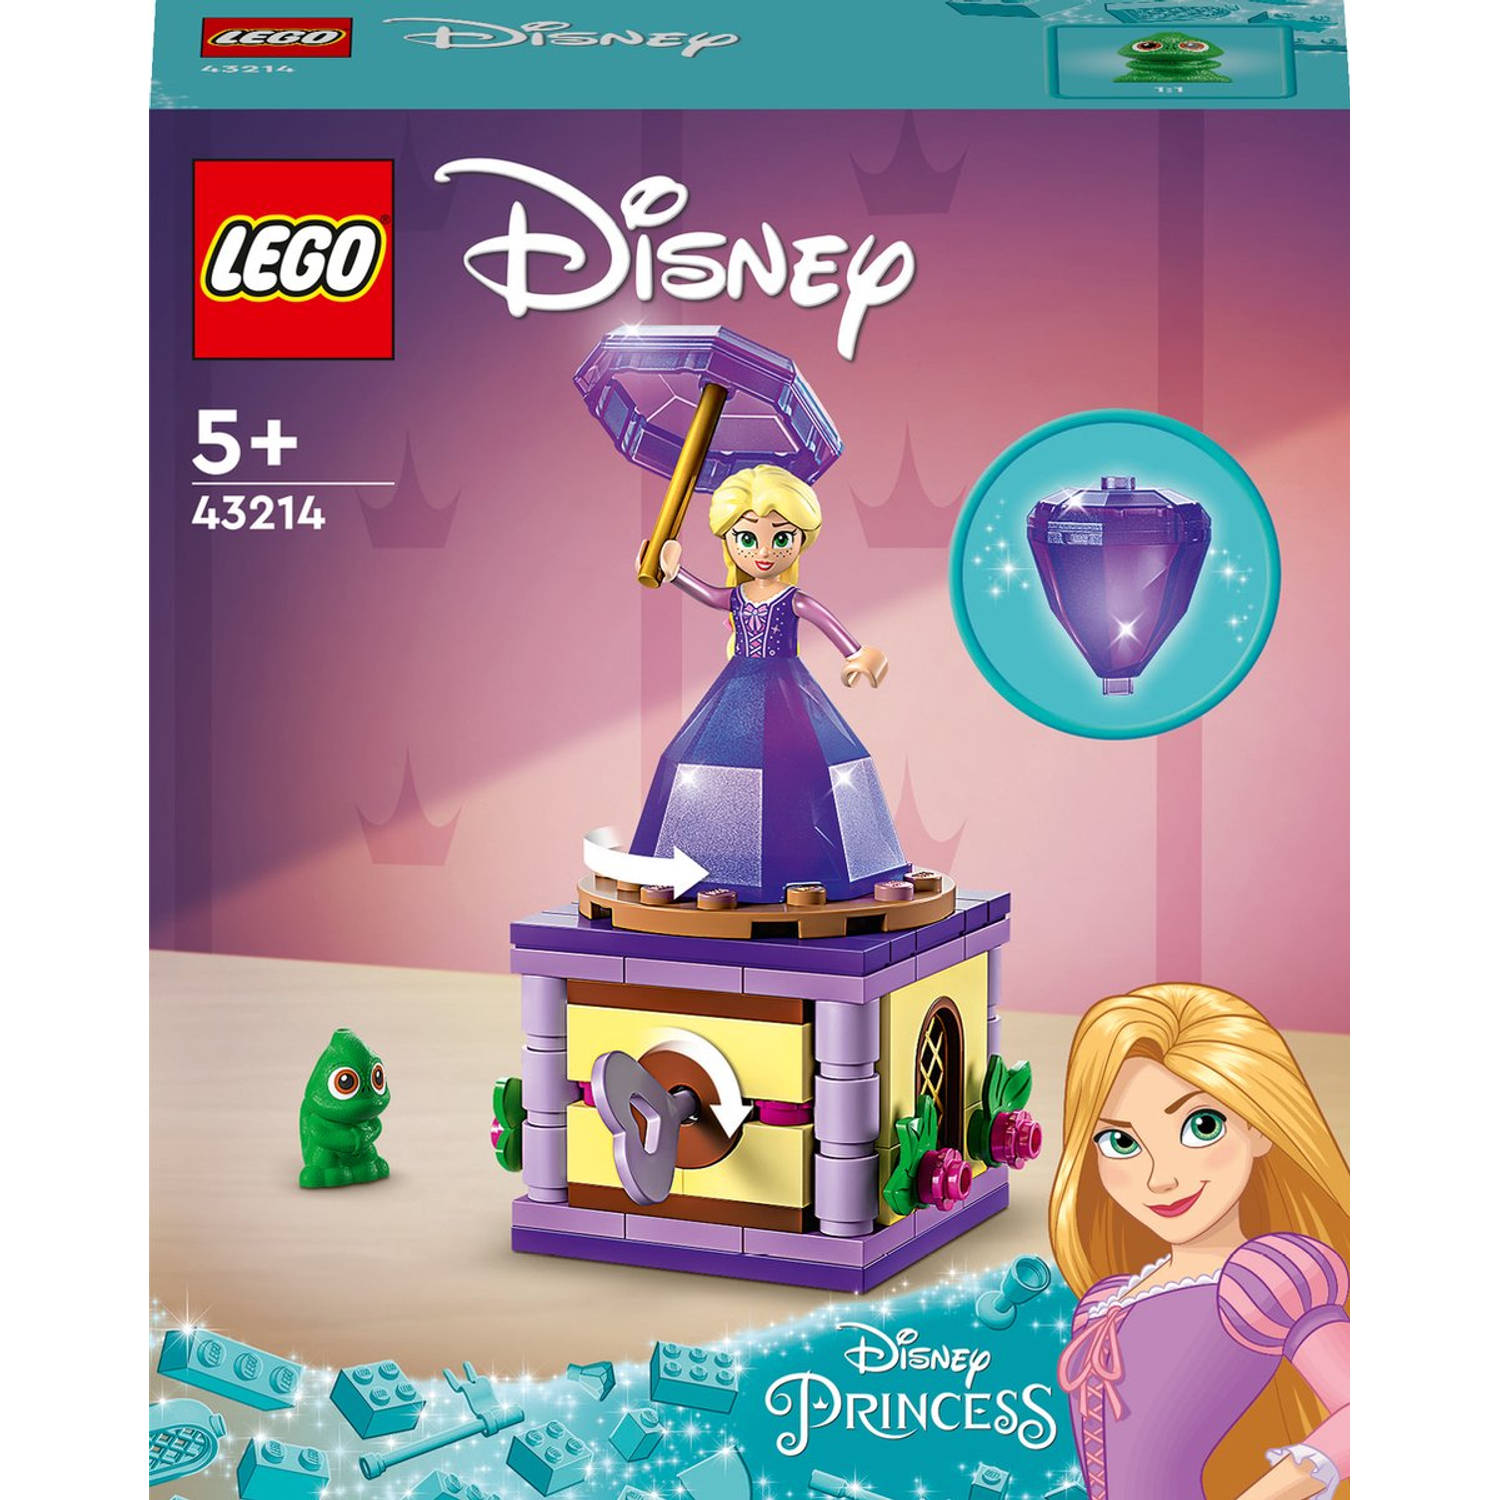 LEGOÂ® 43214 Disney Draaiende Rapunzel